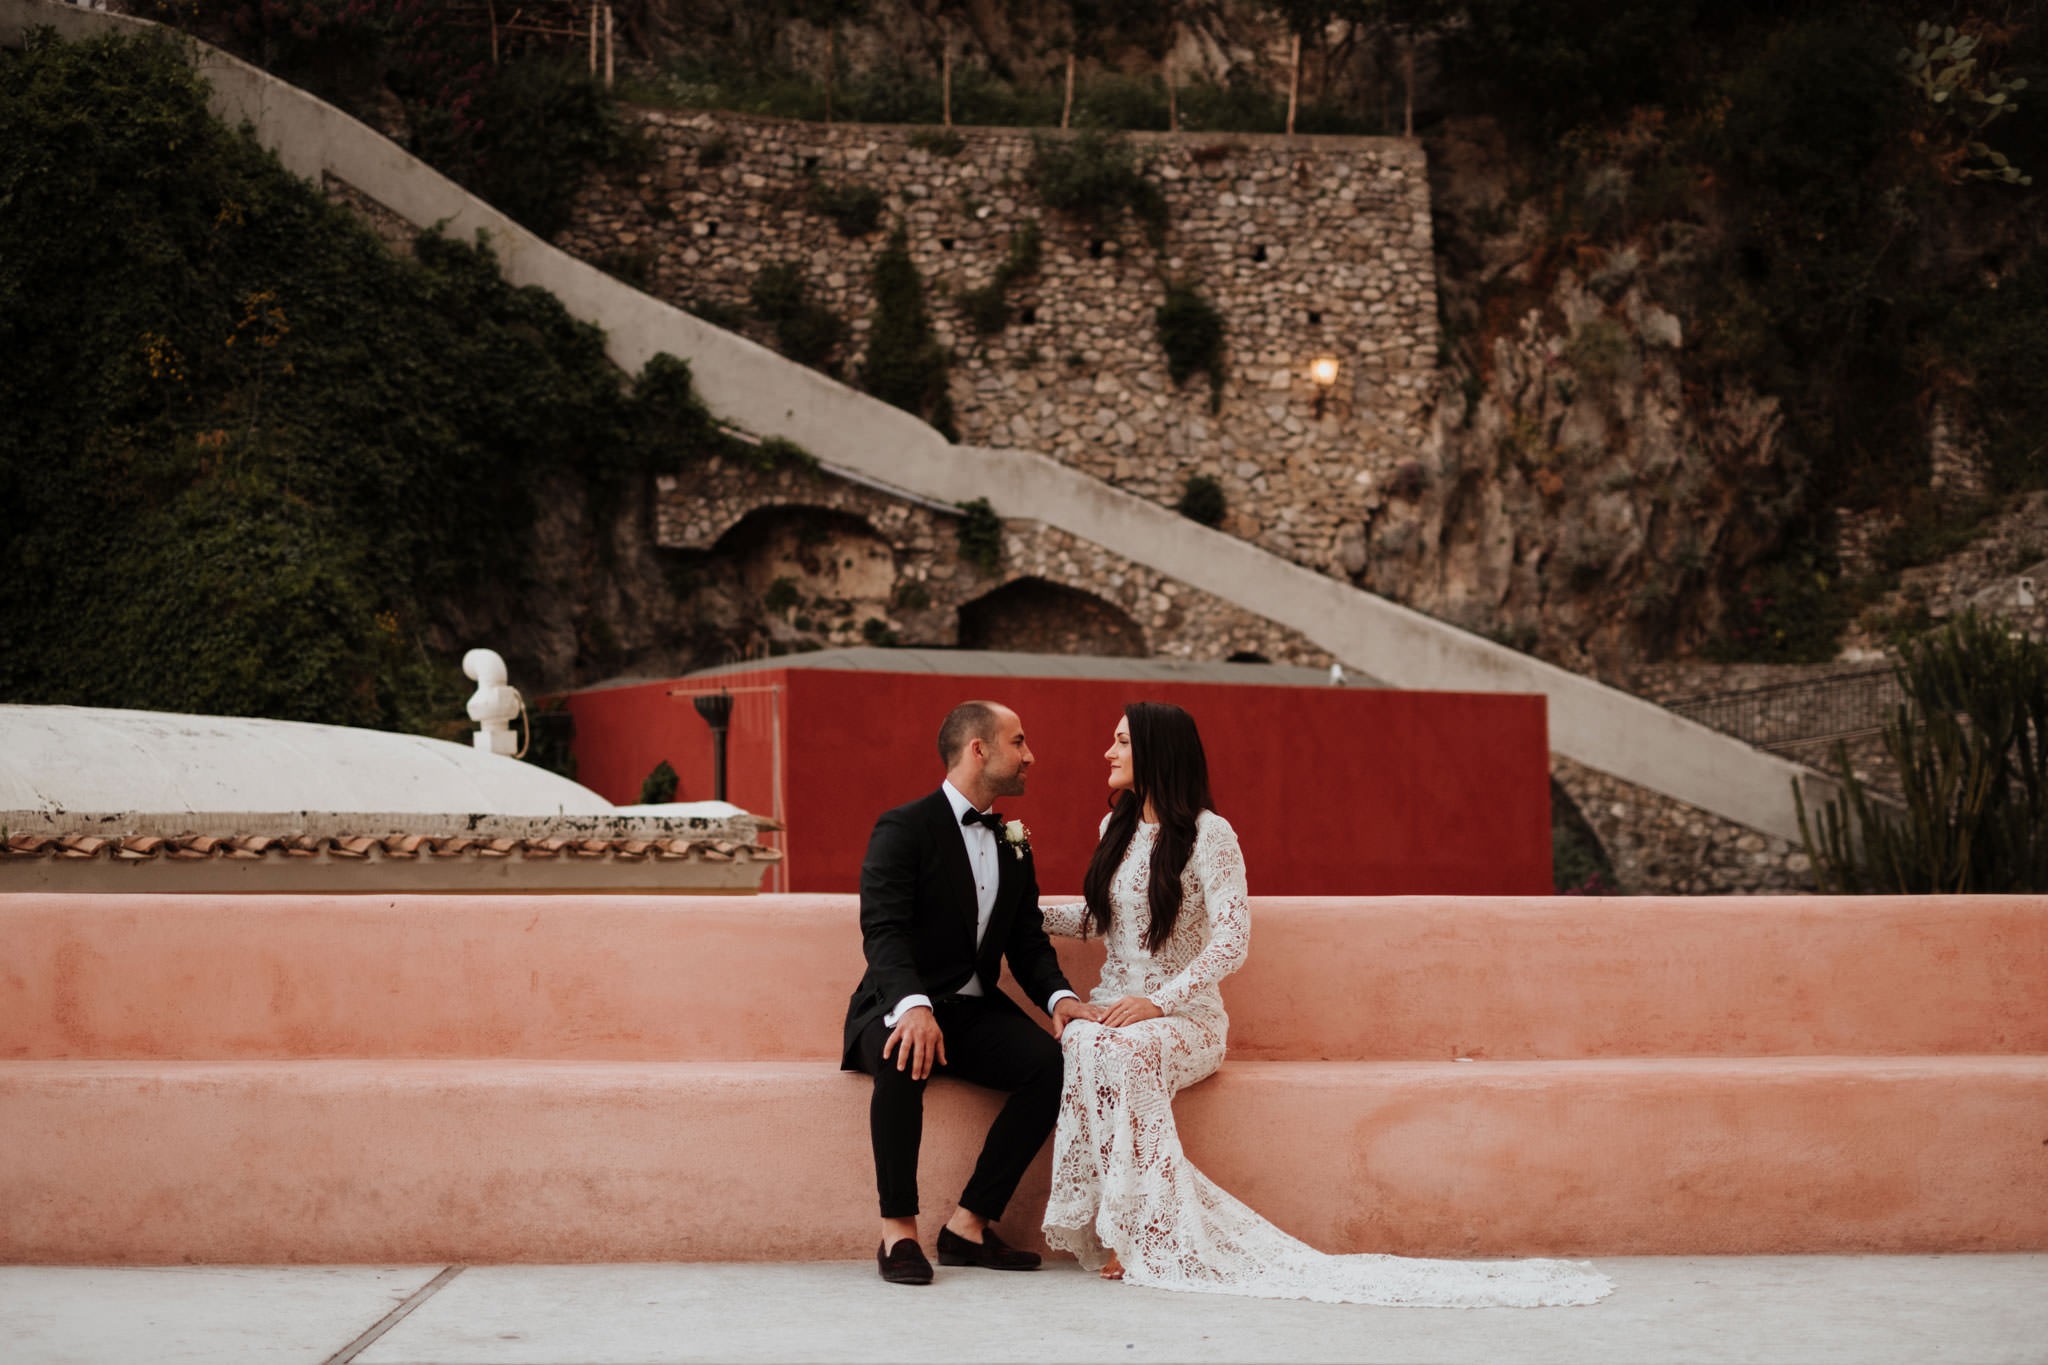 Portraits - Wedding in Positano